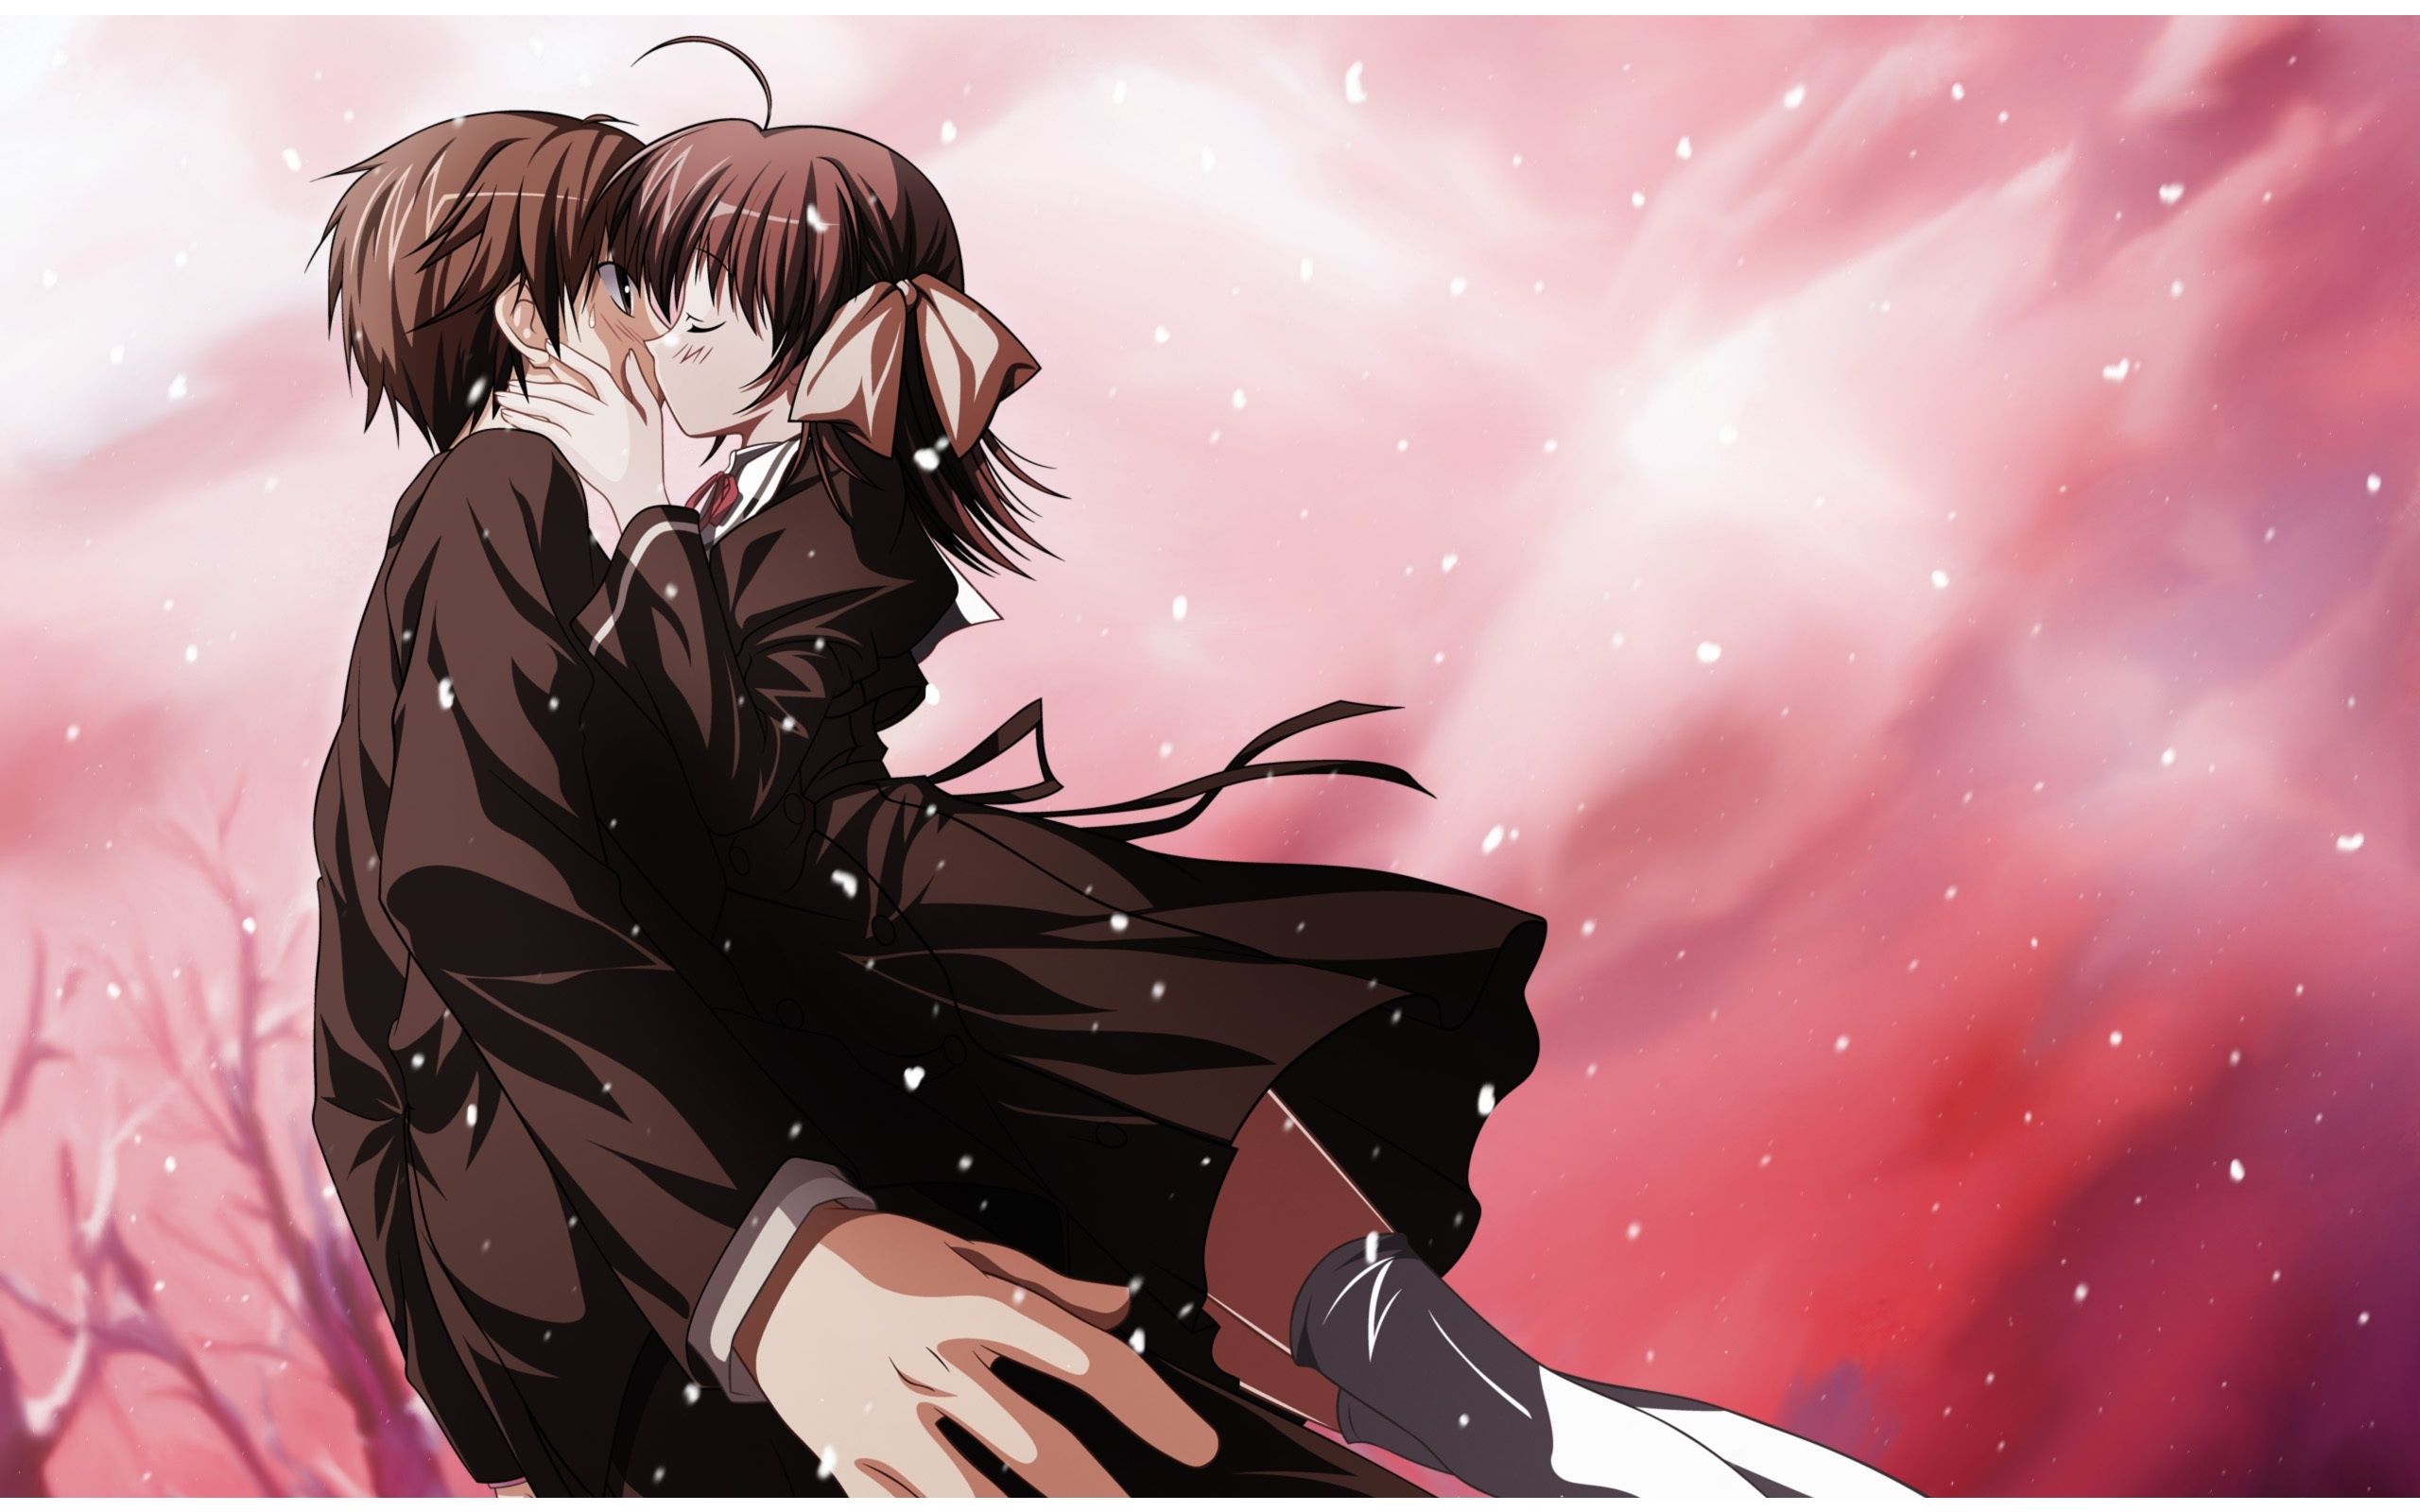 Anime Kiss. Anime Kiss Of Love x 1600. Download. Close